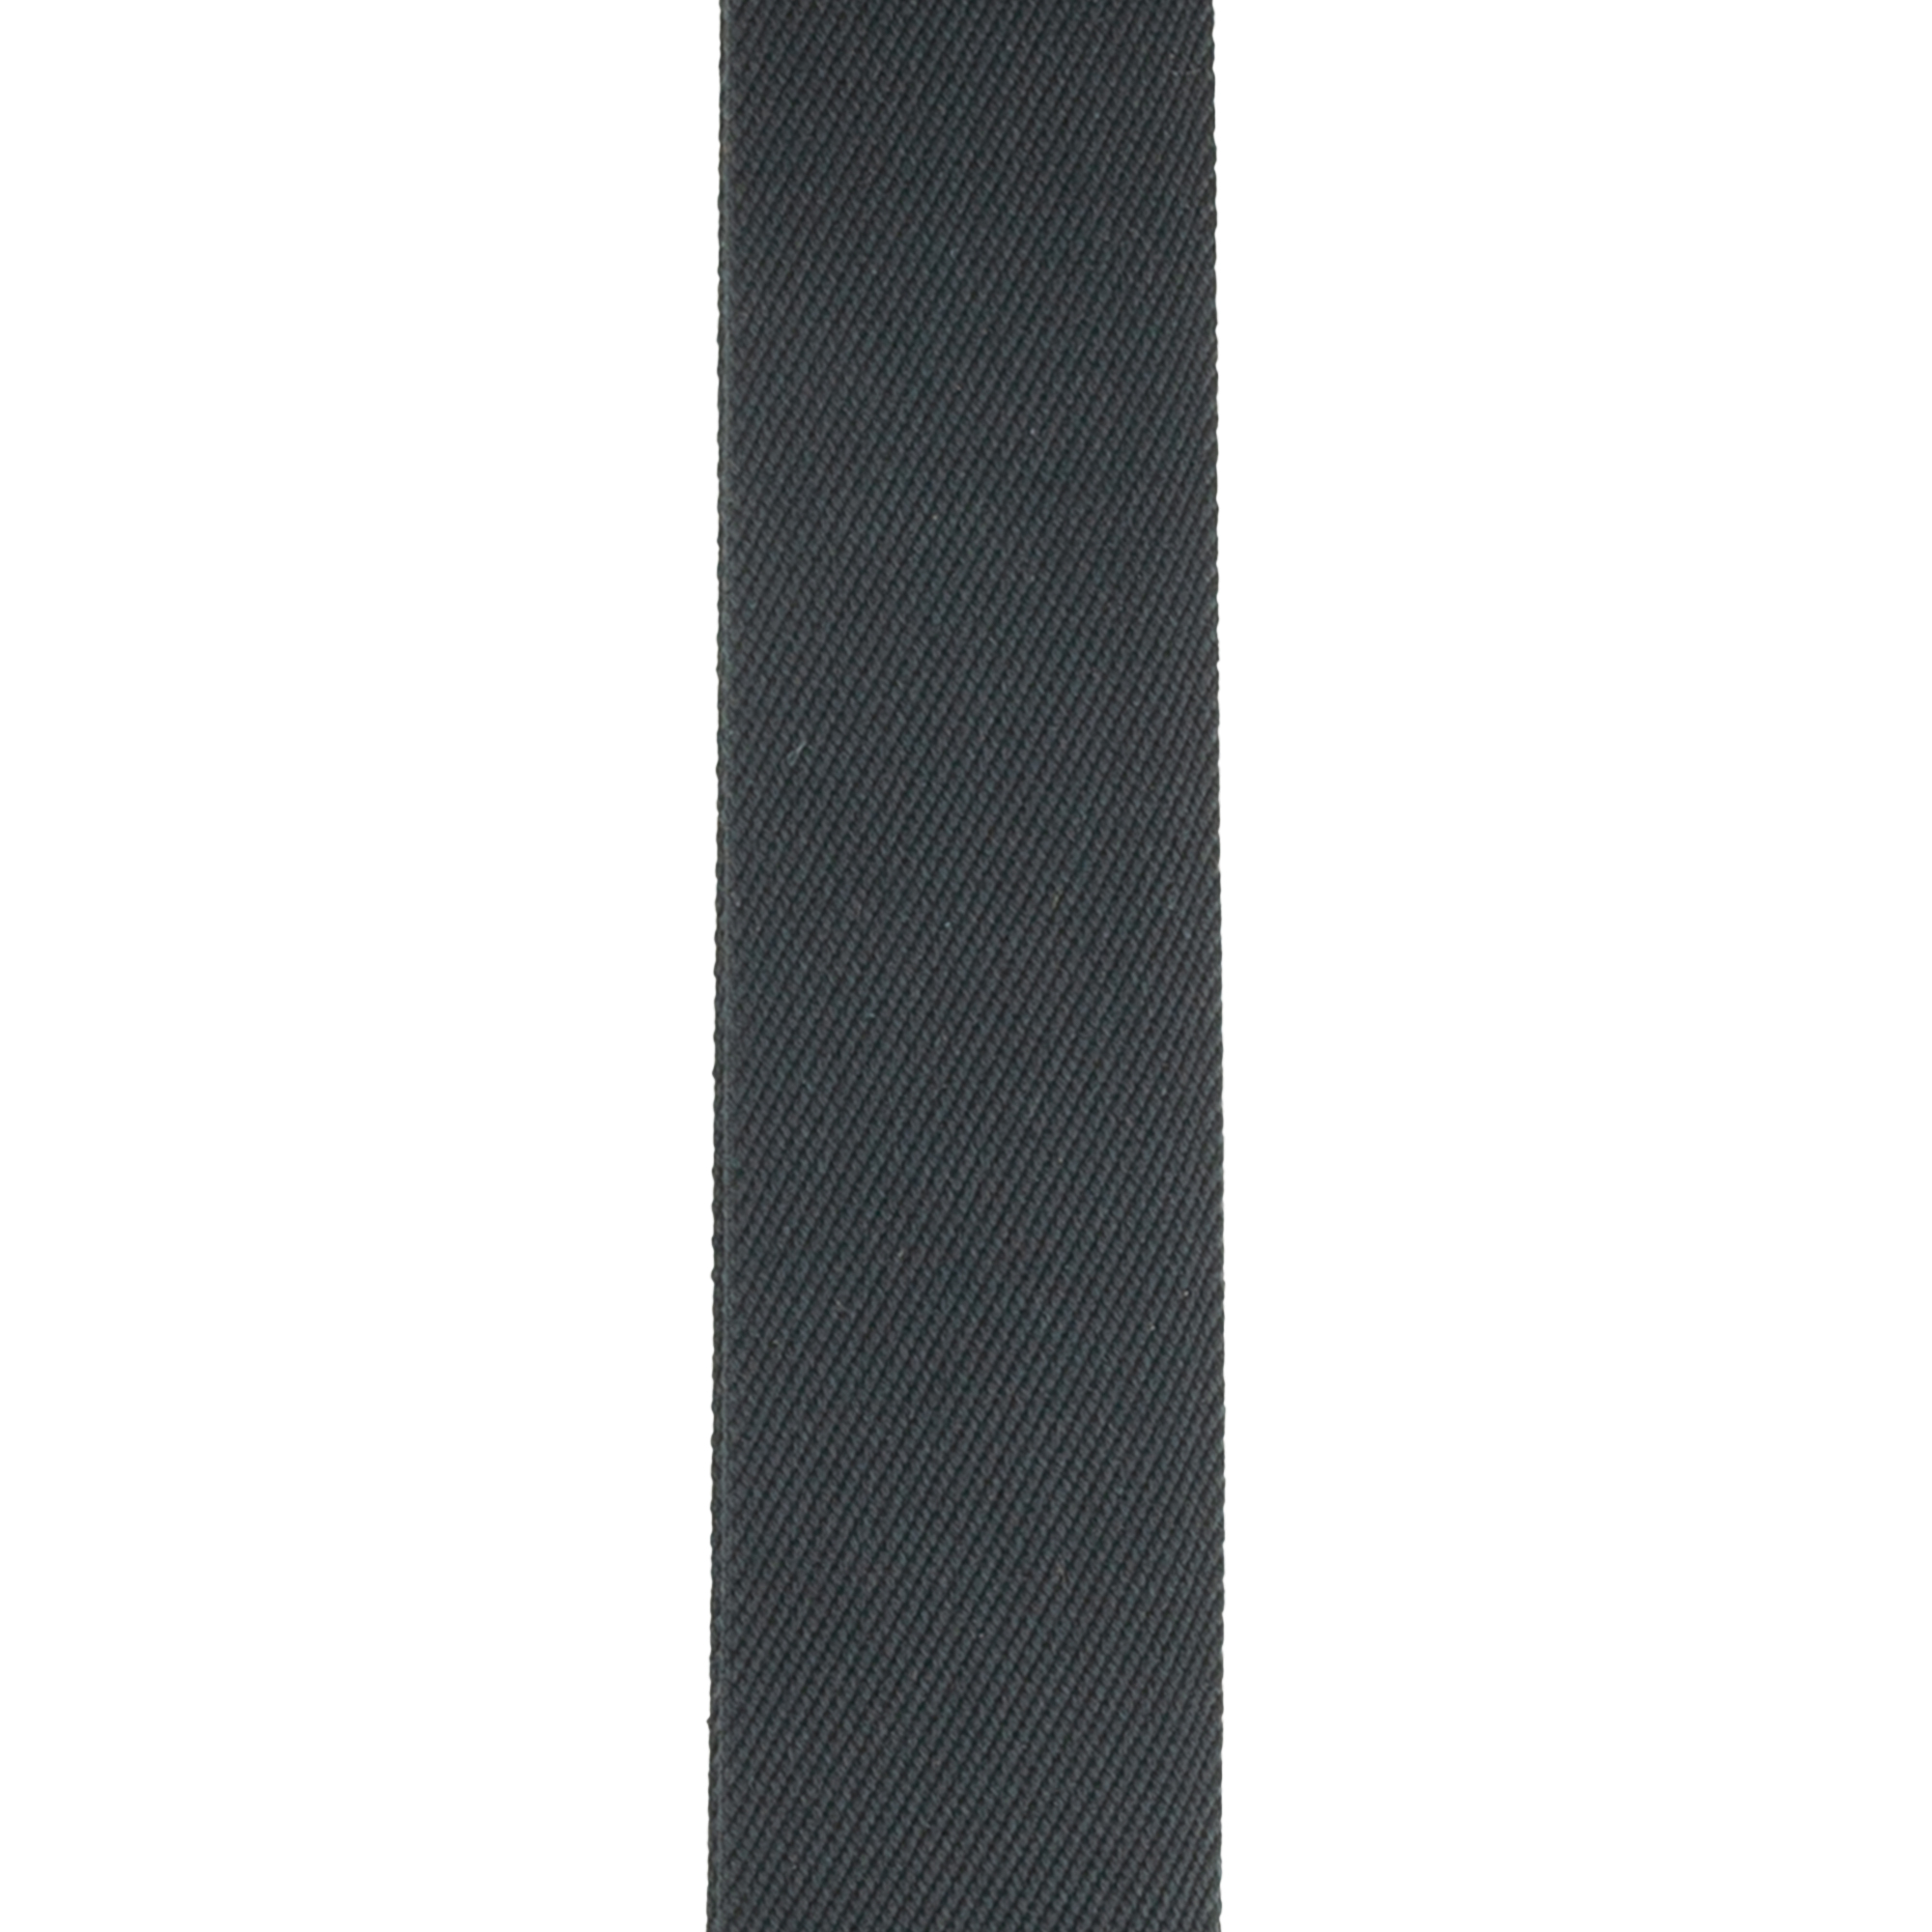 D'addario Auto Lock Strap Skater Black - Sangle Courroie - Variation 1